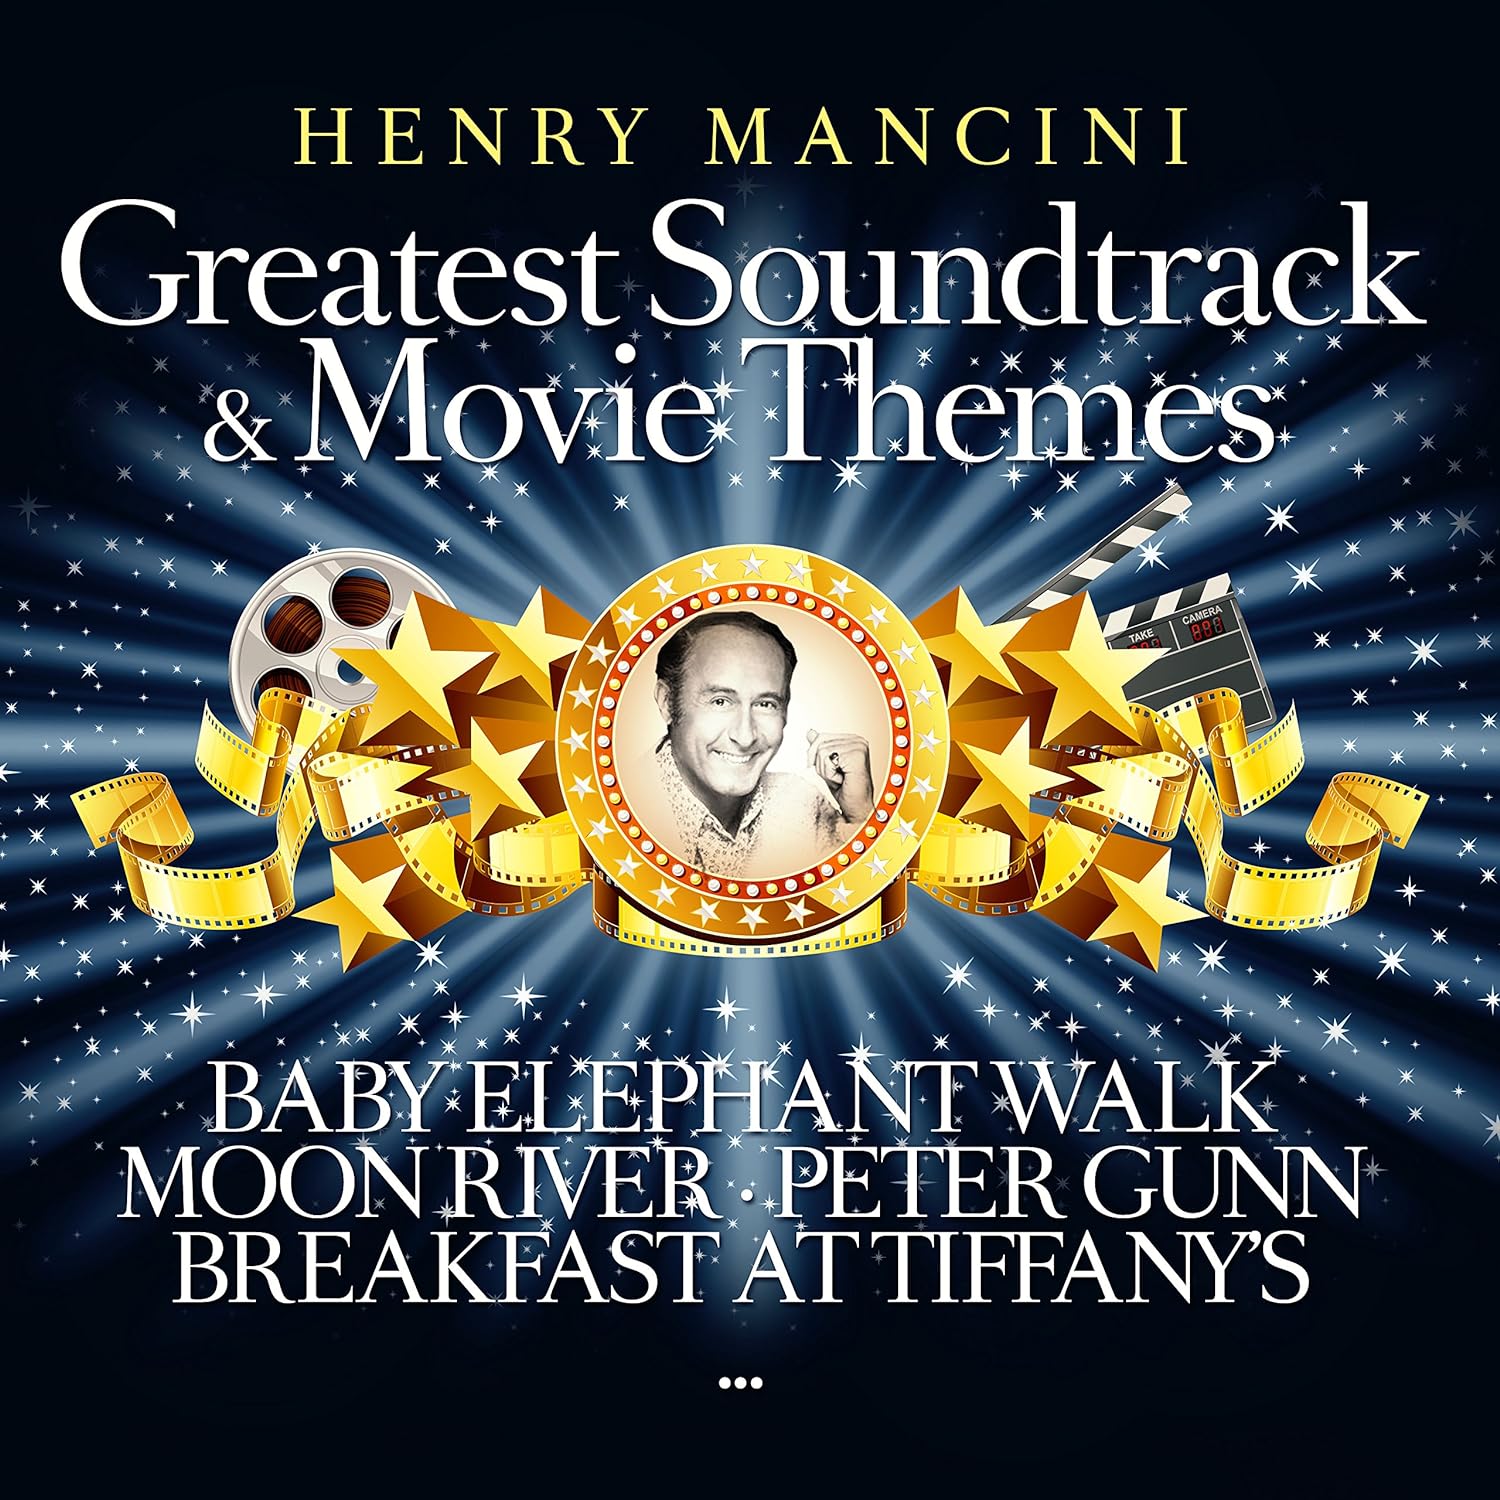 Henry Mancini Greatest Soundtrack & Movies Themes (Vinyl LP + CD)